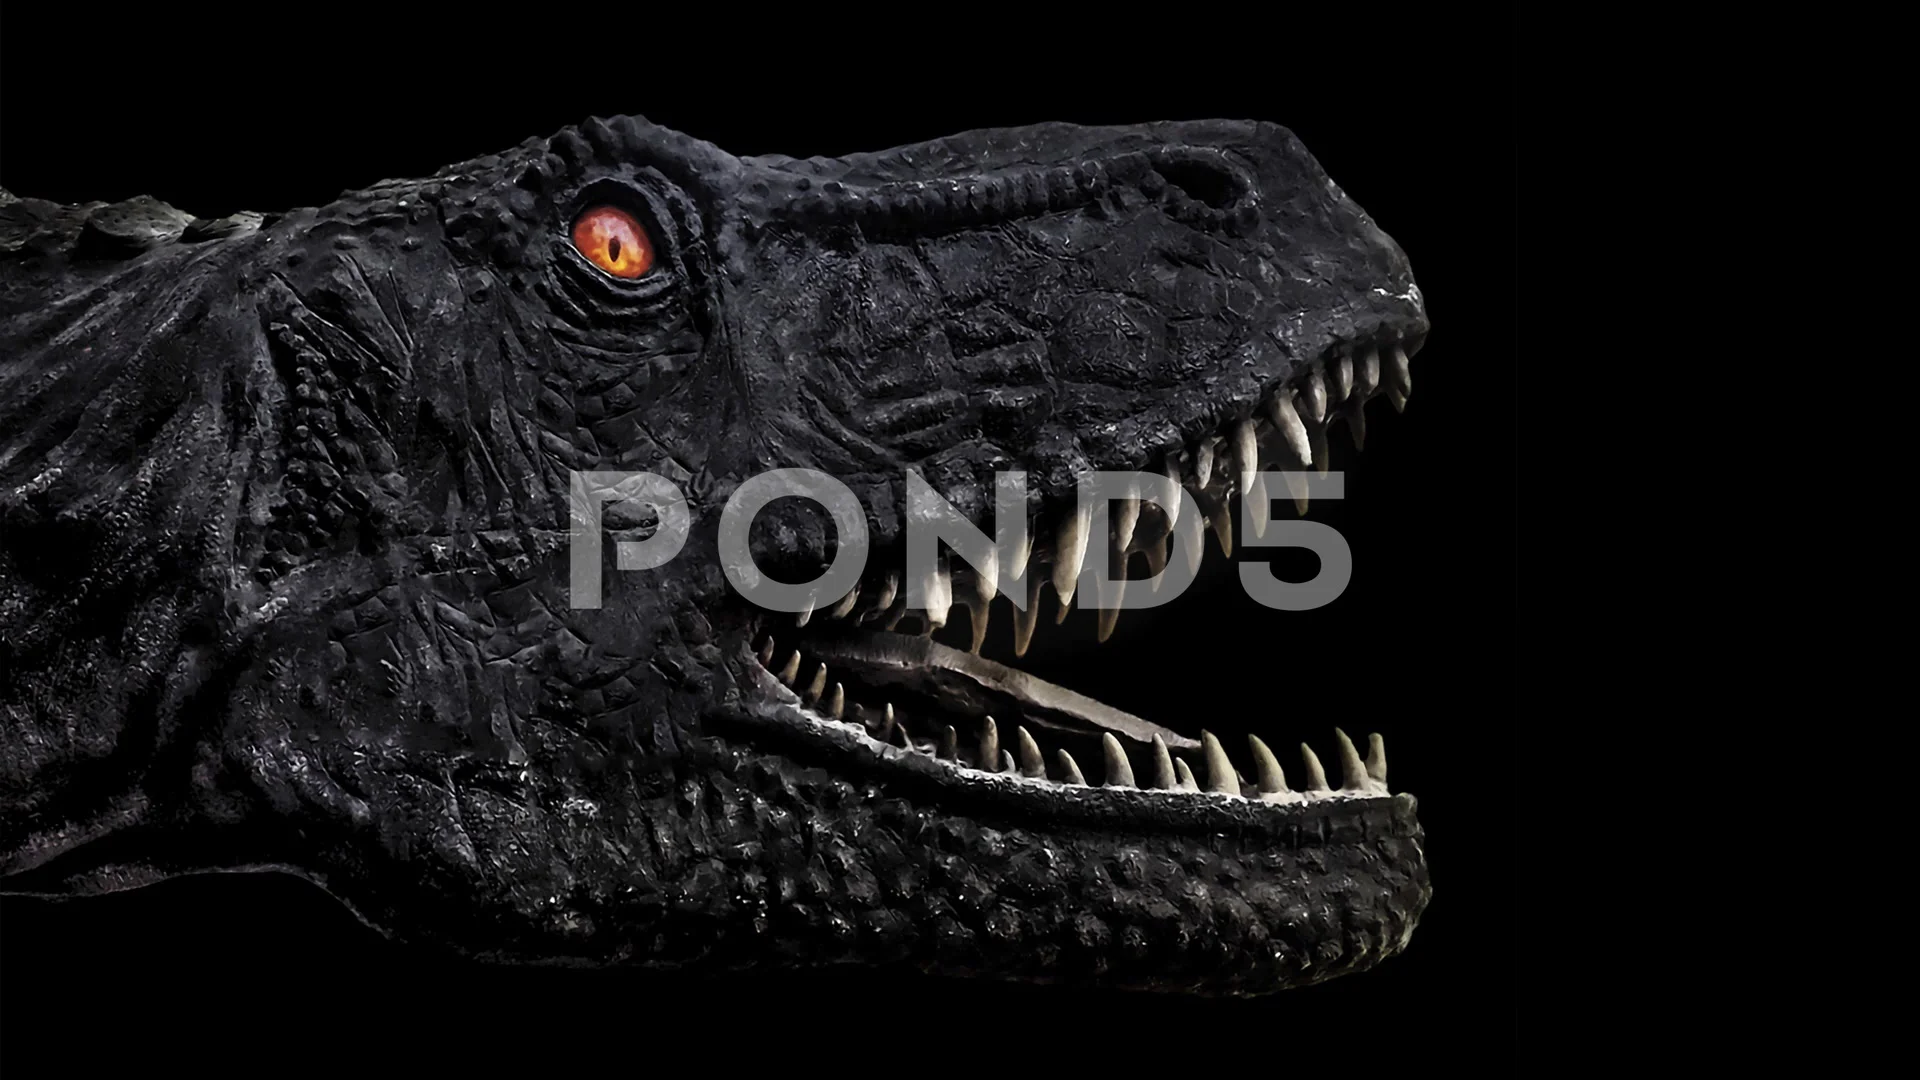 Trex Dinosaur Open Mouth Animation | Stock Video | Pond5